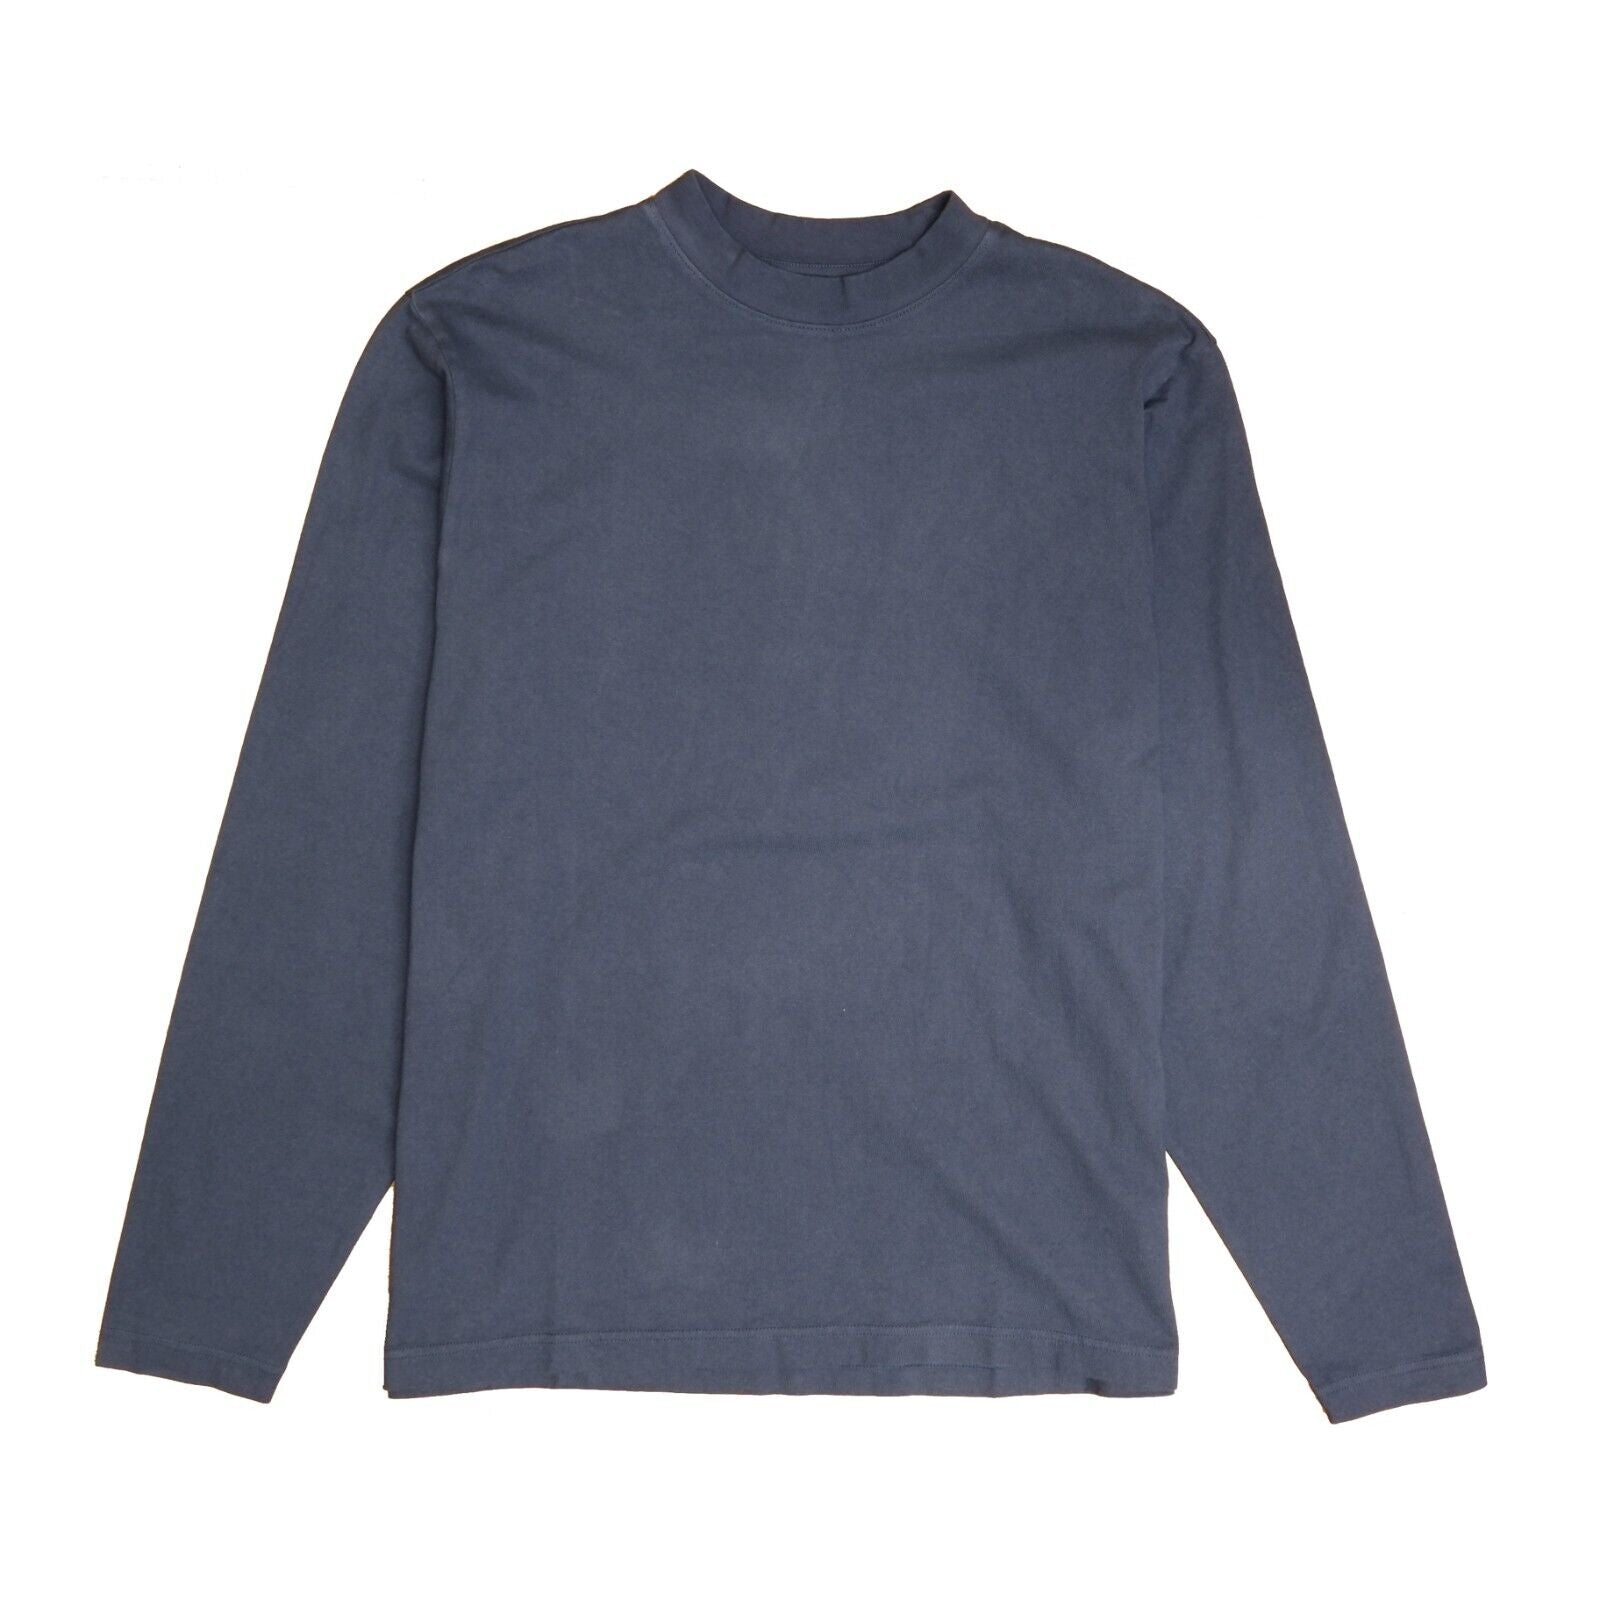 Yeezy Gap Unreleased Long Sleeve T-Shirt Size Medium Navy Blue 